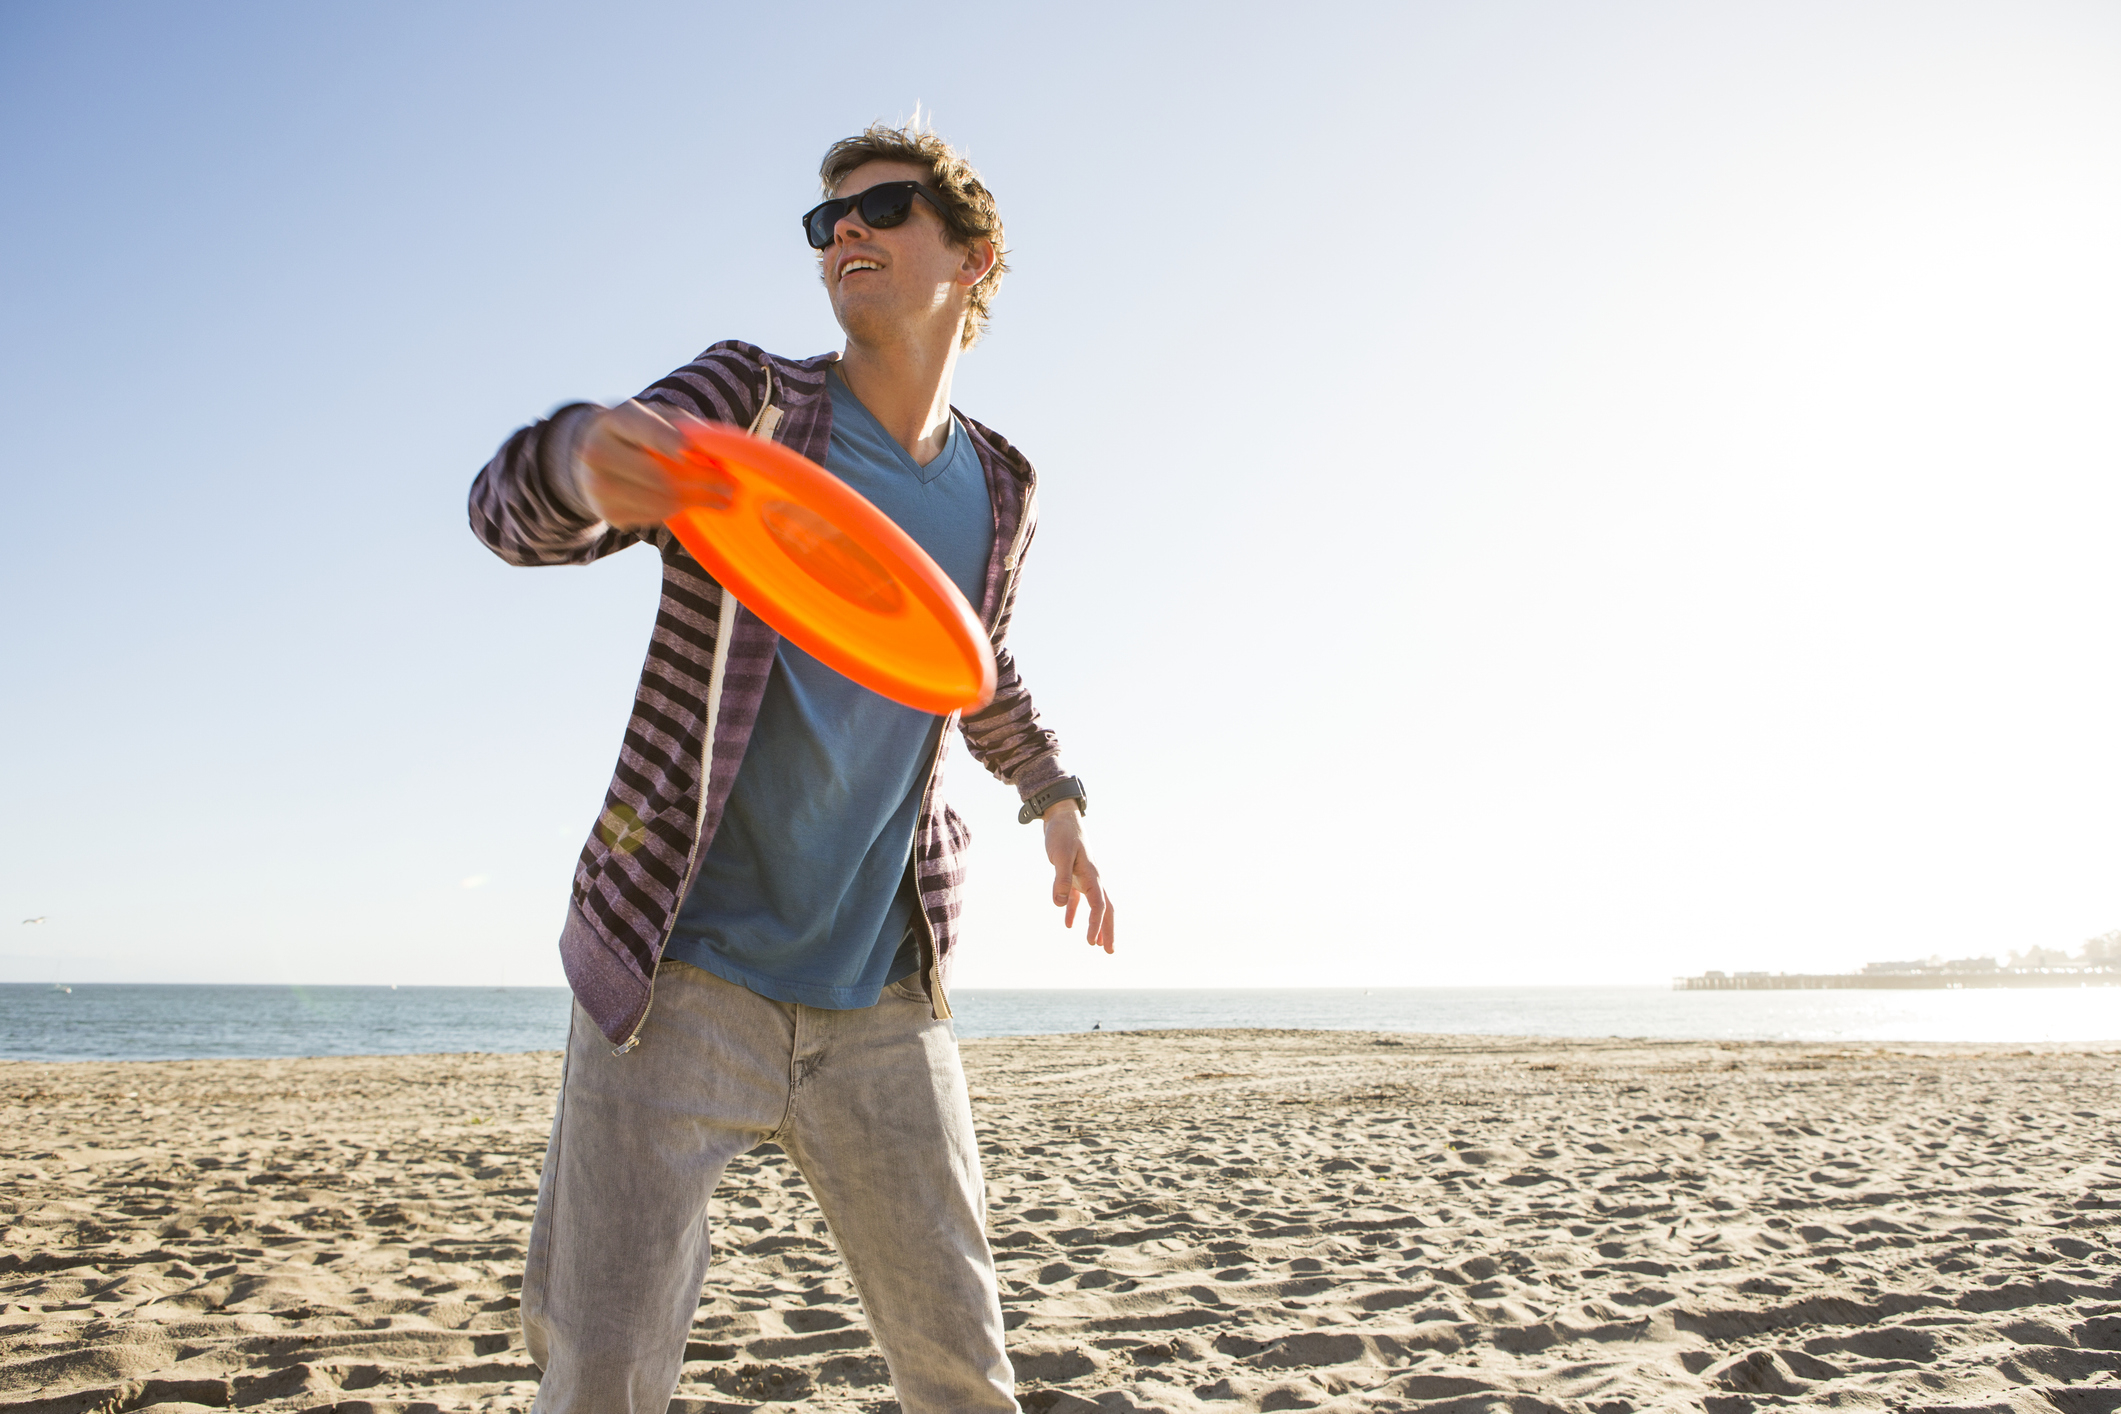 Man throws a frisbee on the beach